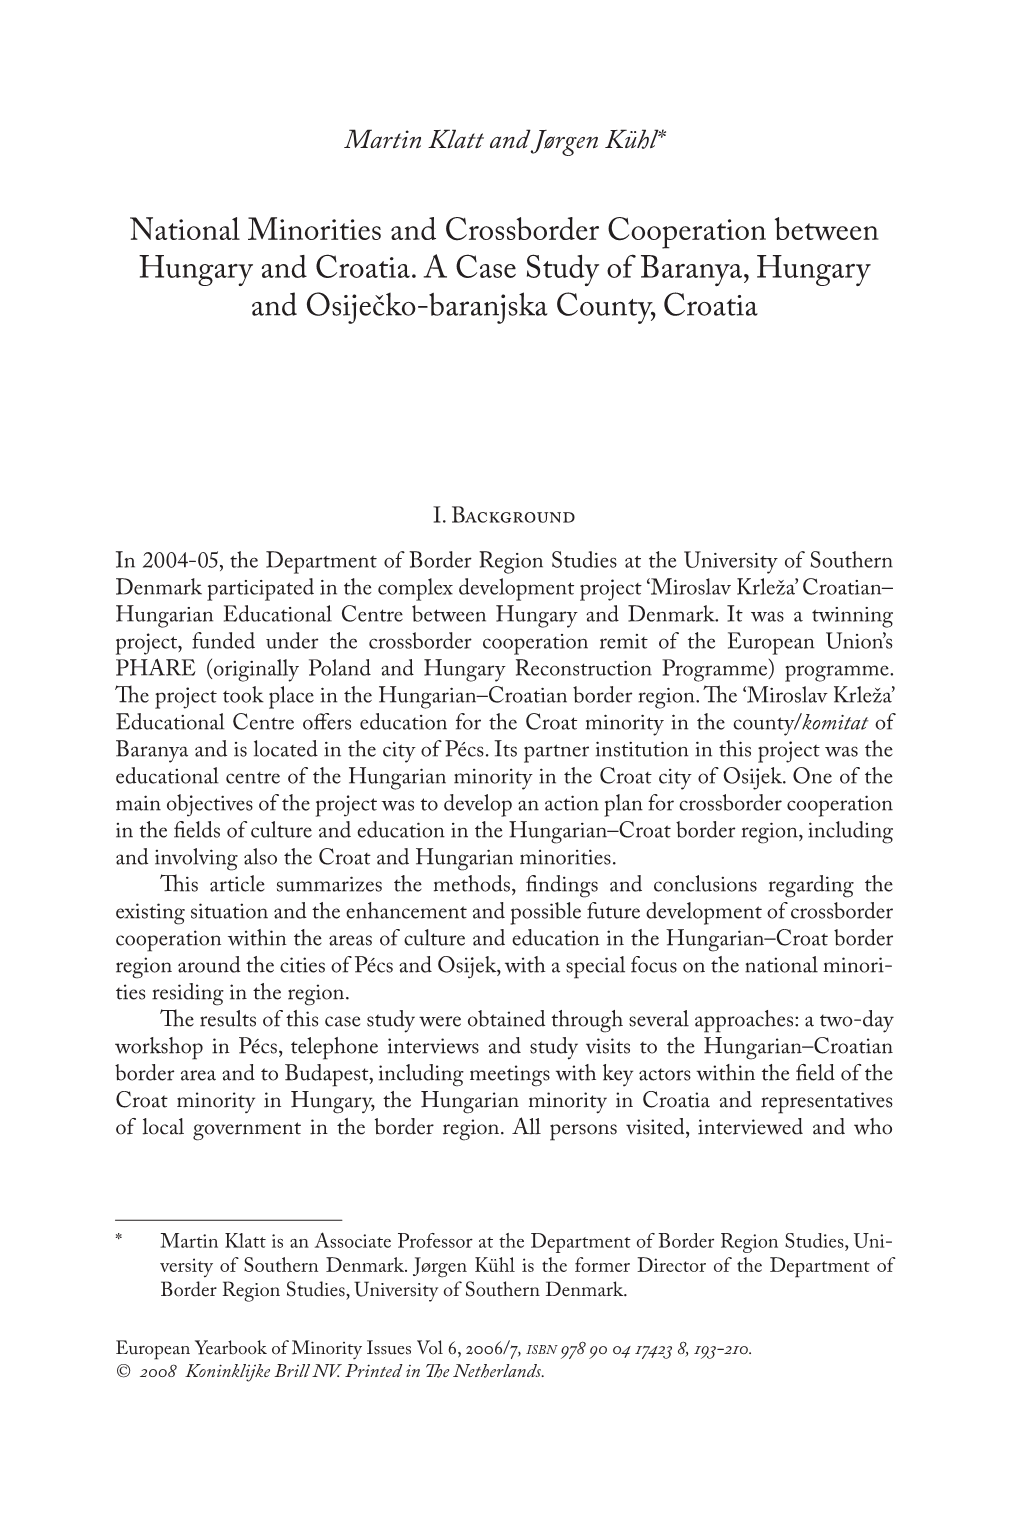 National Minorities and Crossborder Cooperation Between Hungary and Croatia